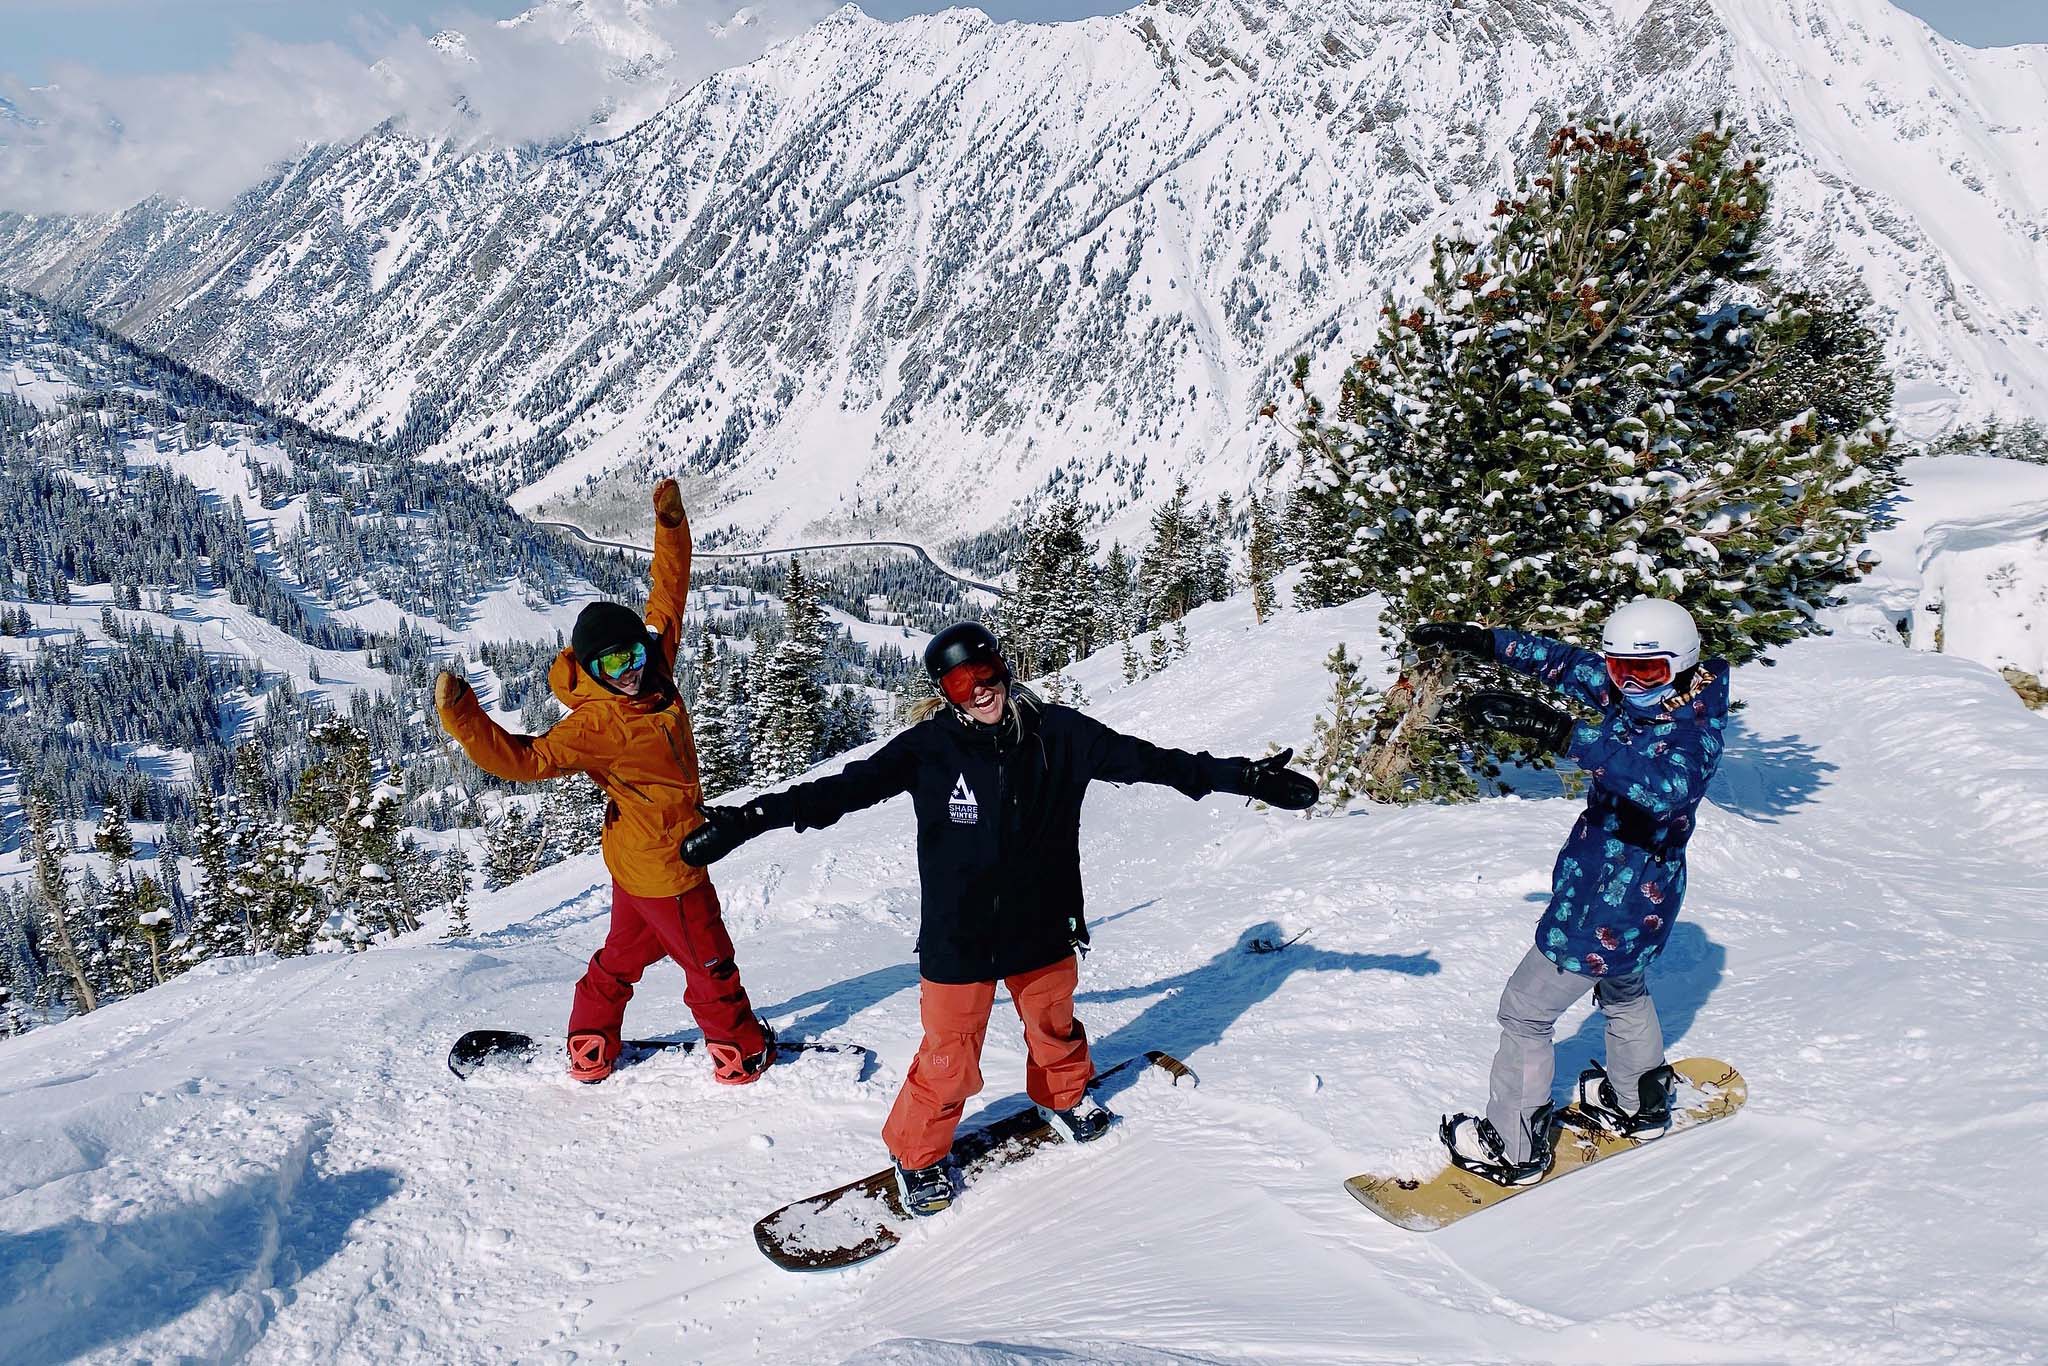 Snowboarders at the 2020 Women's Summit ride Snowbird